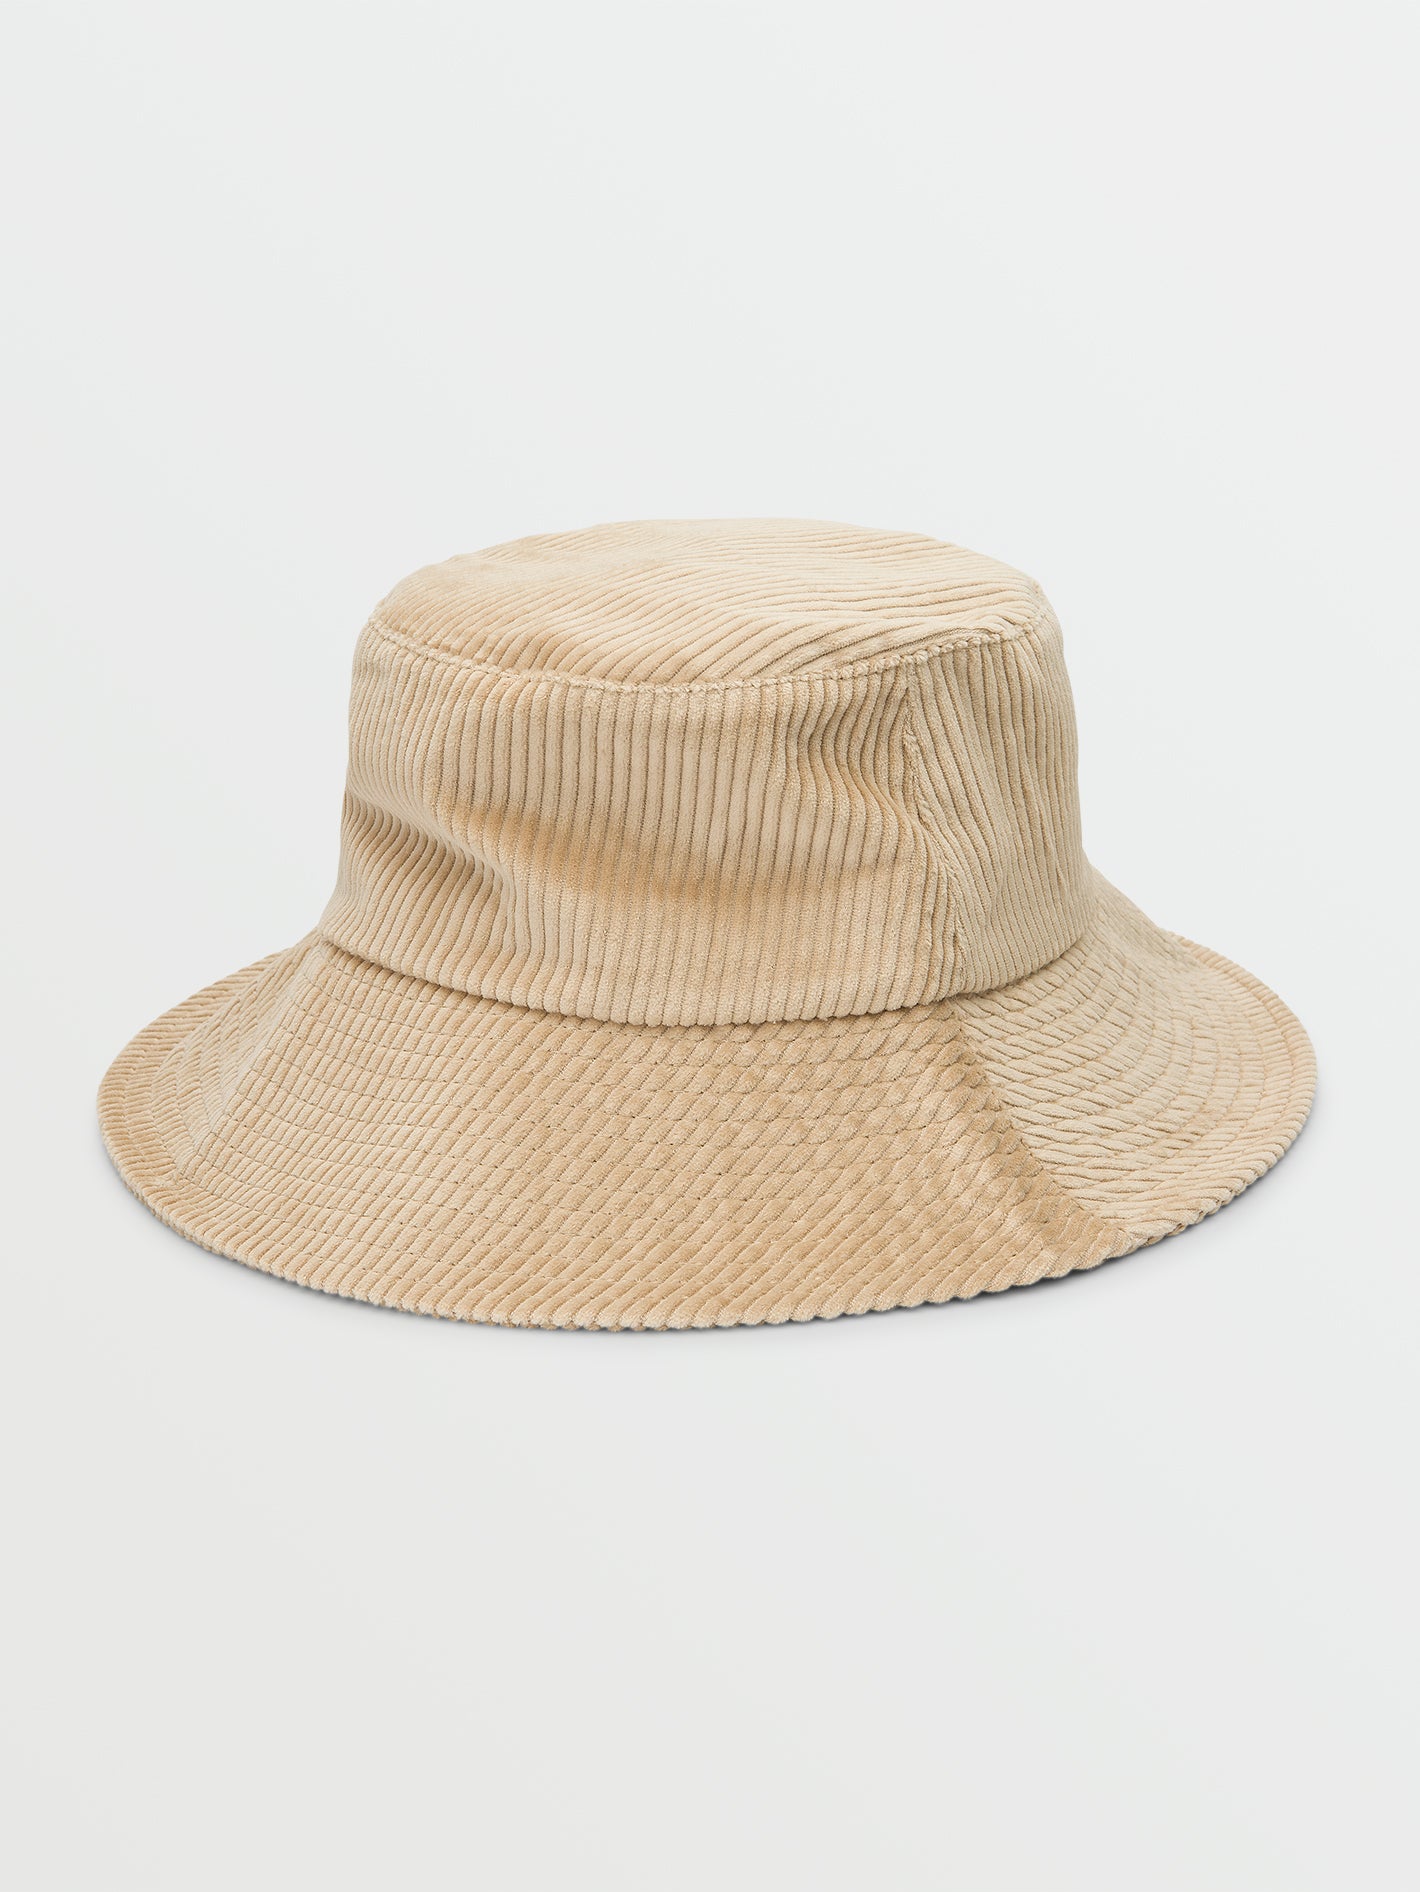 Pembroke UPF Hat - Khaki